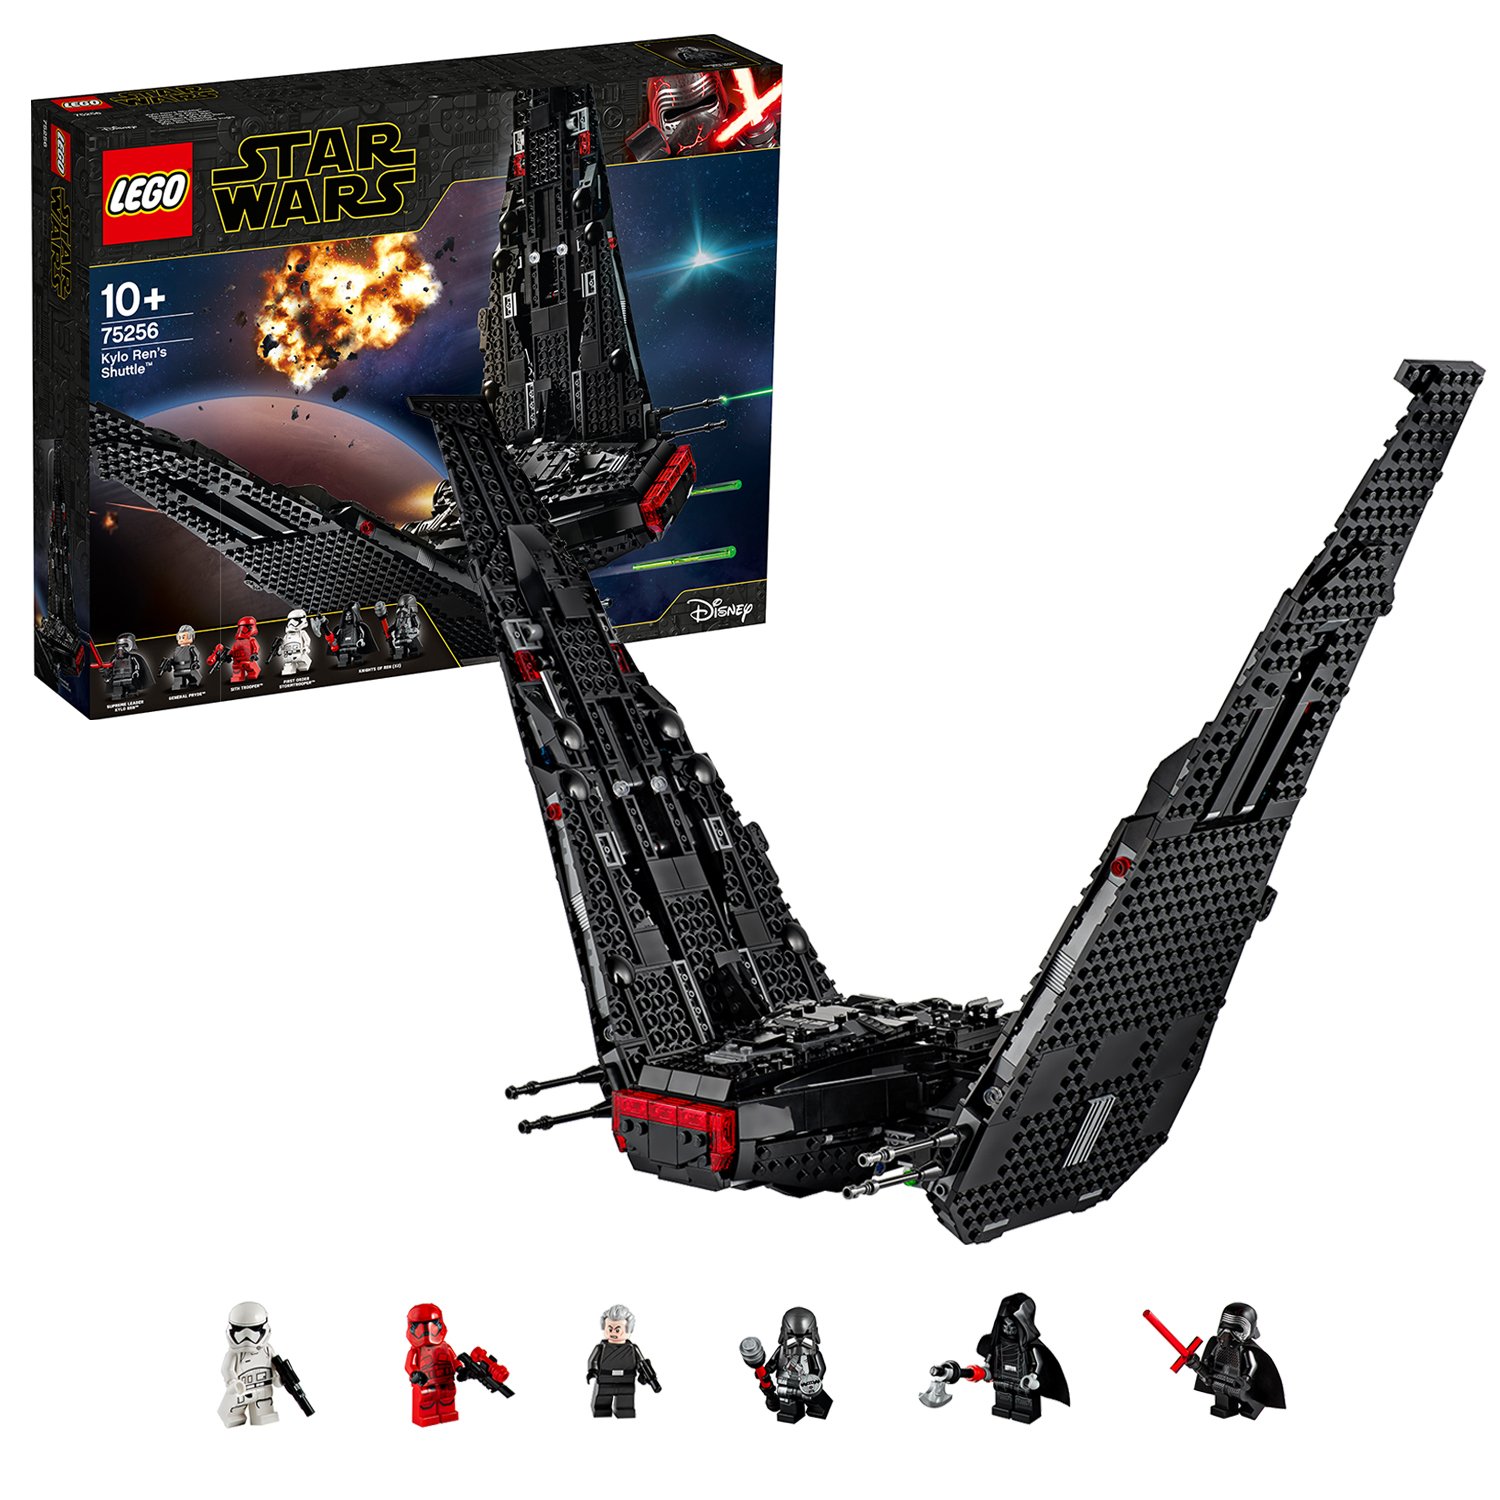 LEGO Star Wars Kylo Ren's Shuttle Building Set - 75256